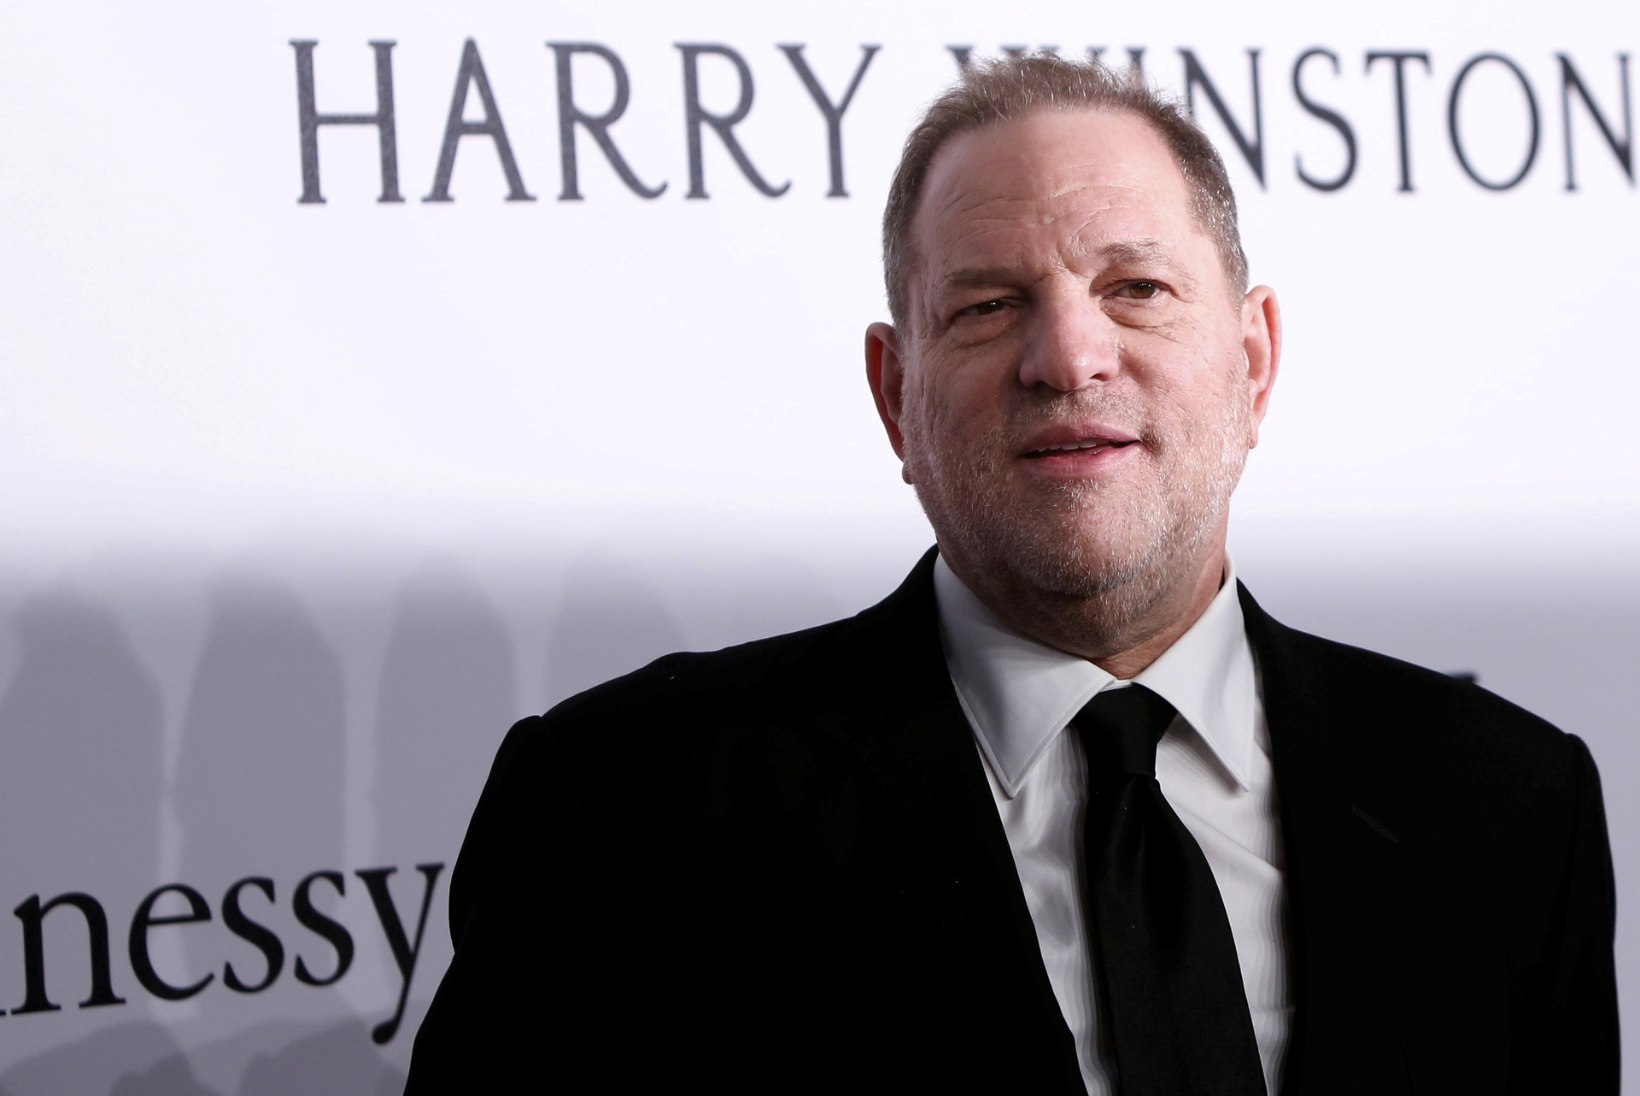 New Yorgi osariik kaebas Weinsteini filmikompanii kohtusse